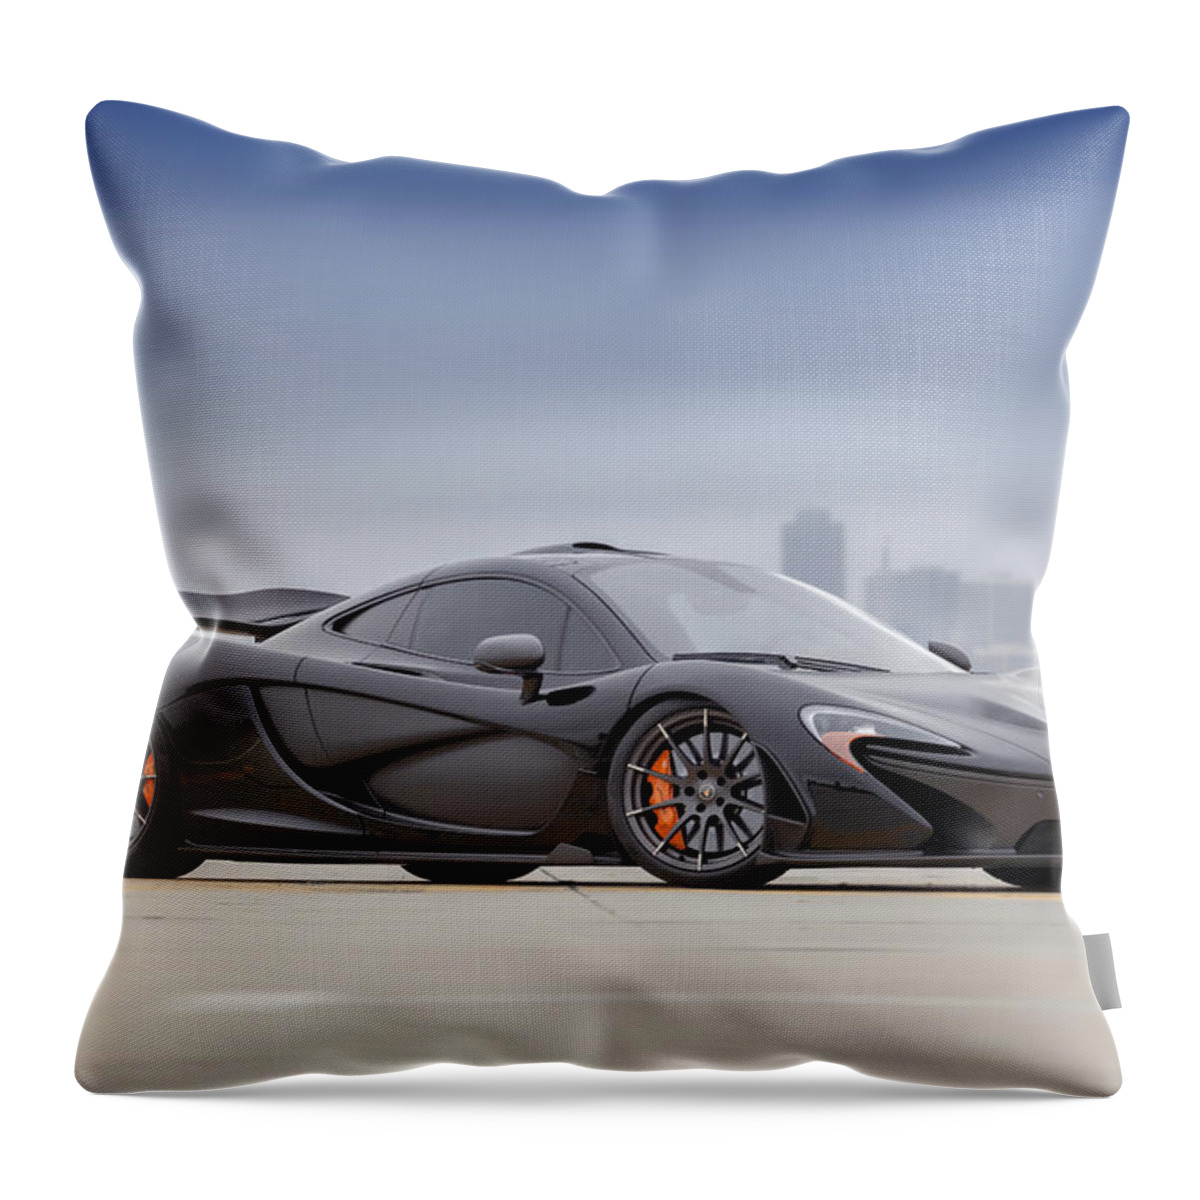 Mclaren Throw Pillow featuring the photograph McLaren P1 #1 by ItzKirb Photography